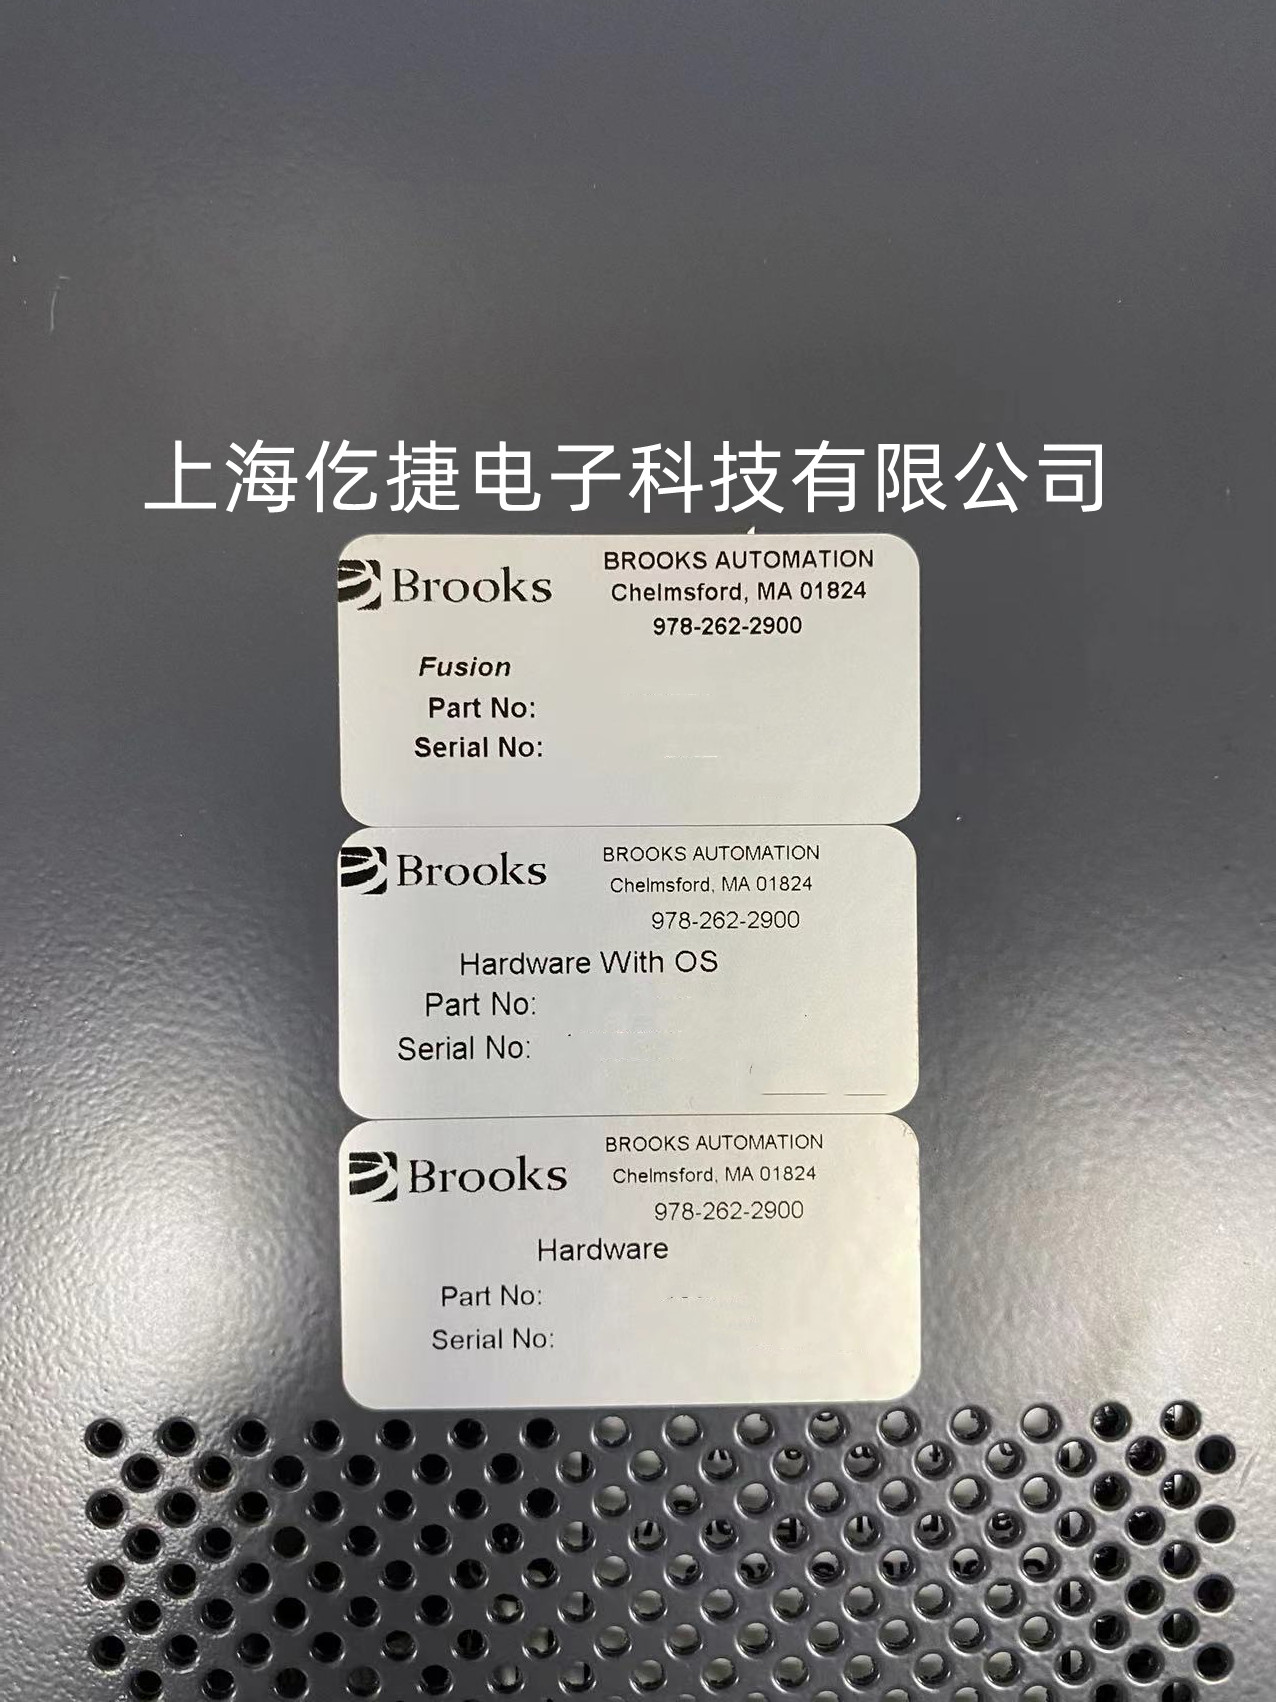 BROOKS 978-262-2900 布鲁克斯控制器维修